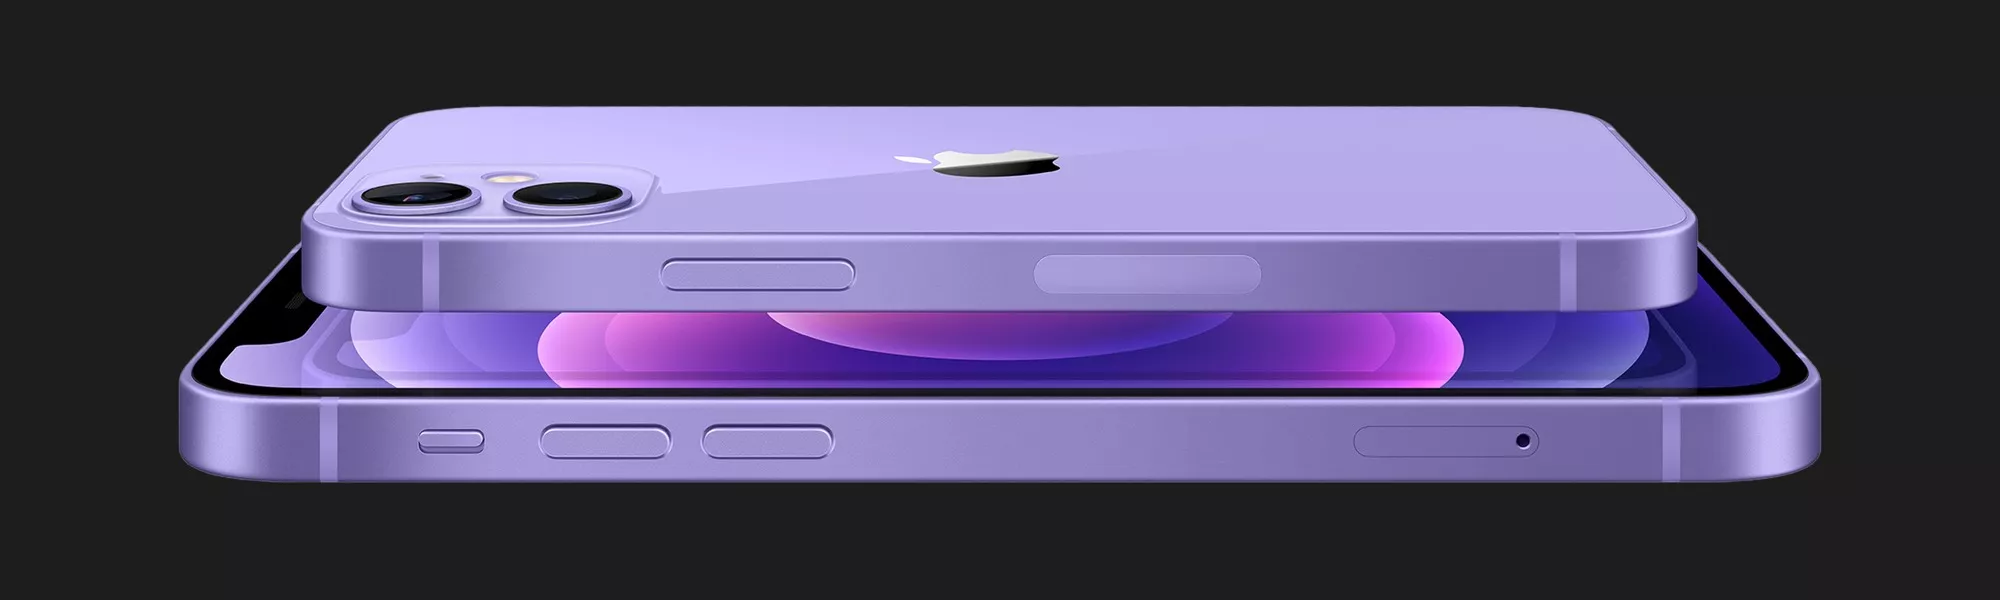 Apple iPhone 12 64GB (Purple)